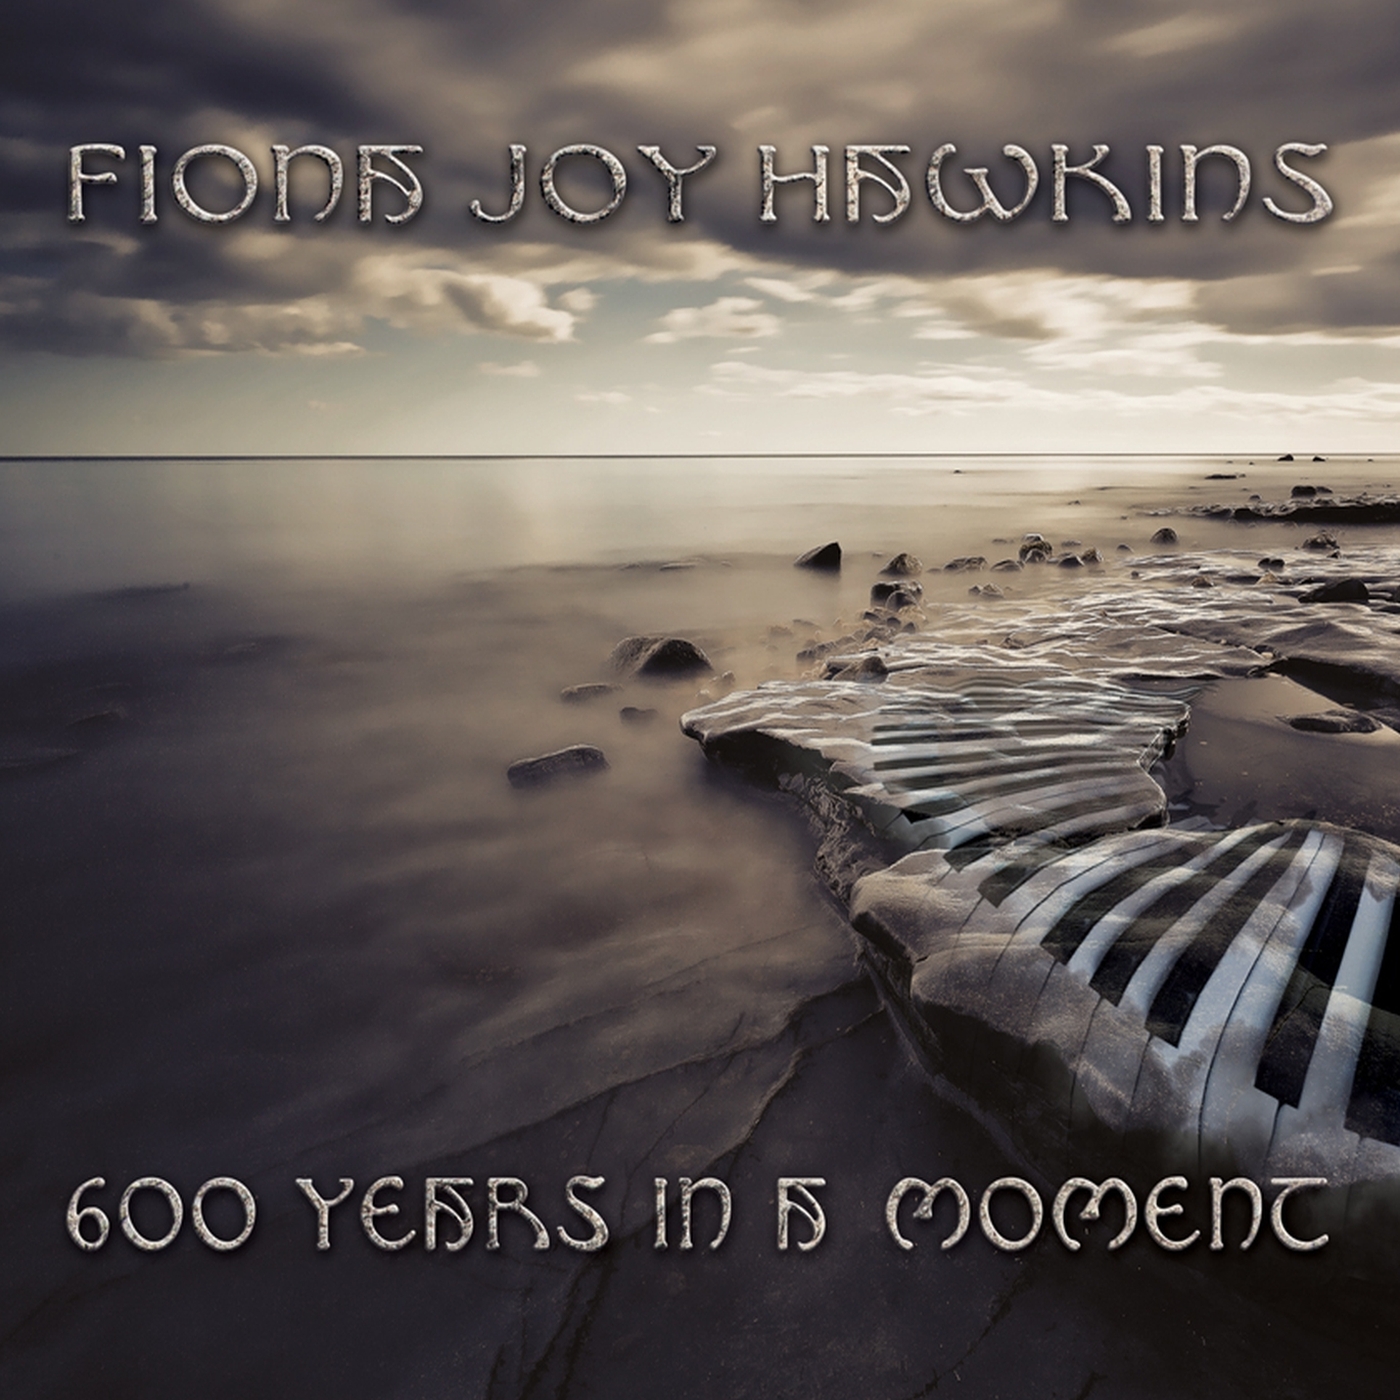 Fiona Joy Hawkins' new album: 600 Years in a Moment